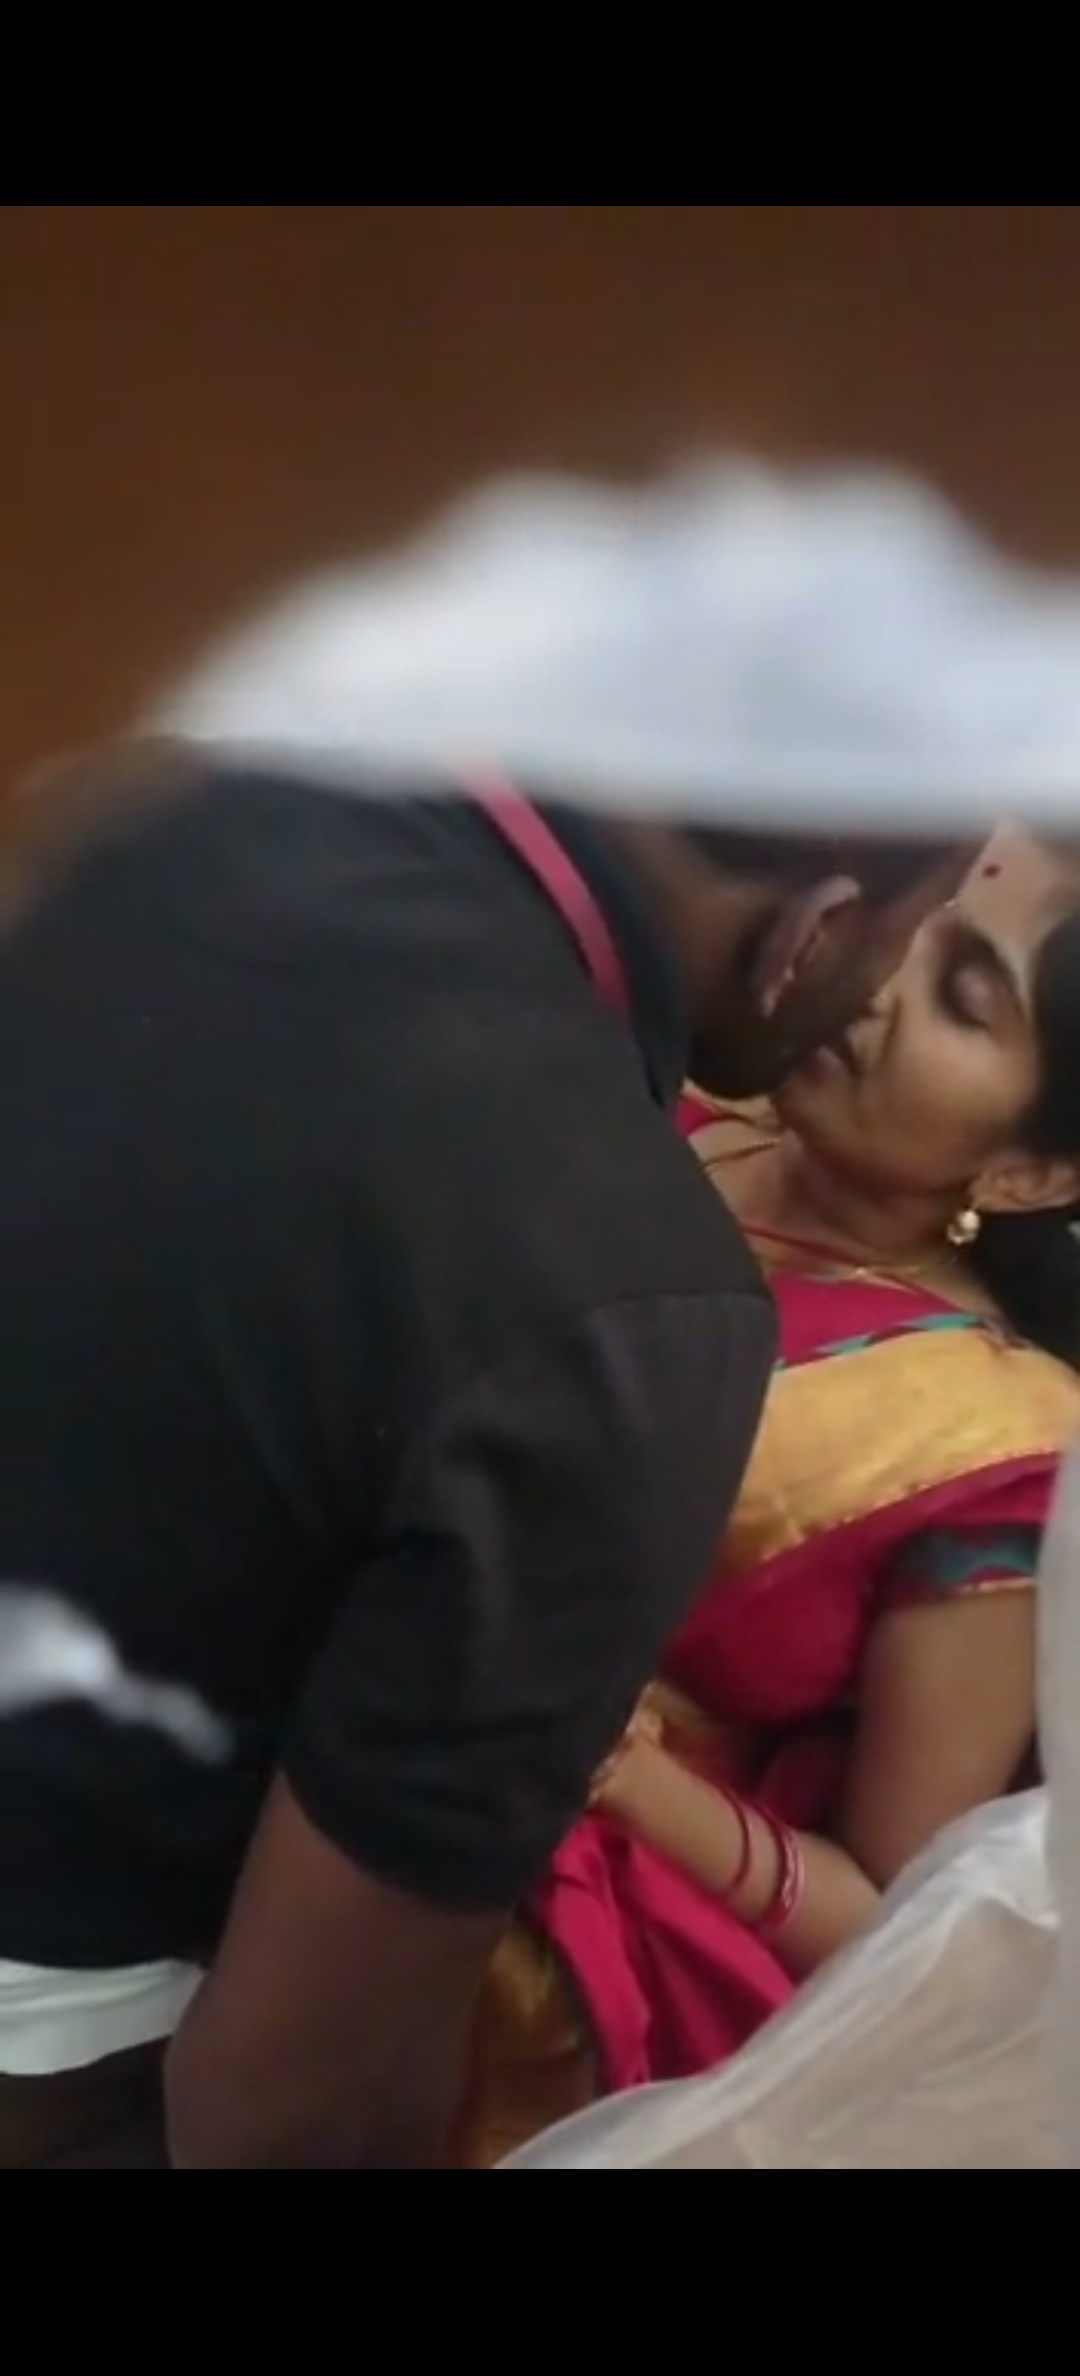 Tamil Lovers Store Room Hidden Full Video photo